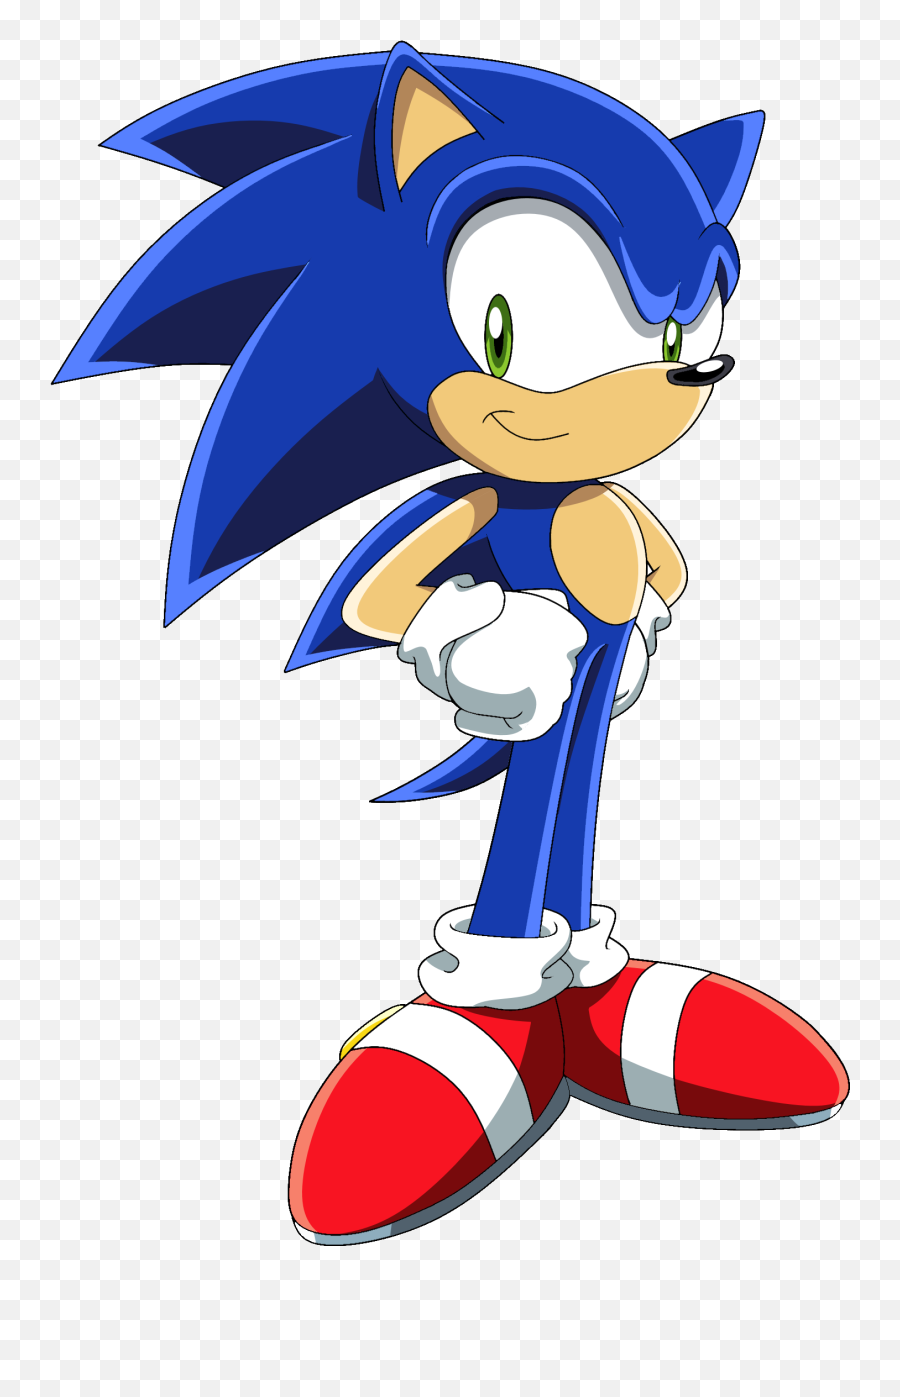 Download Sonic The Hedgehog - Sonic The Hedgehog Deviantart Png,Sonic The Hedgehog Png